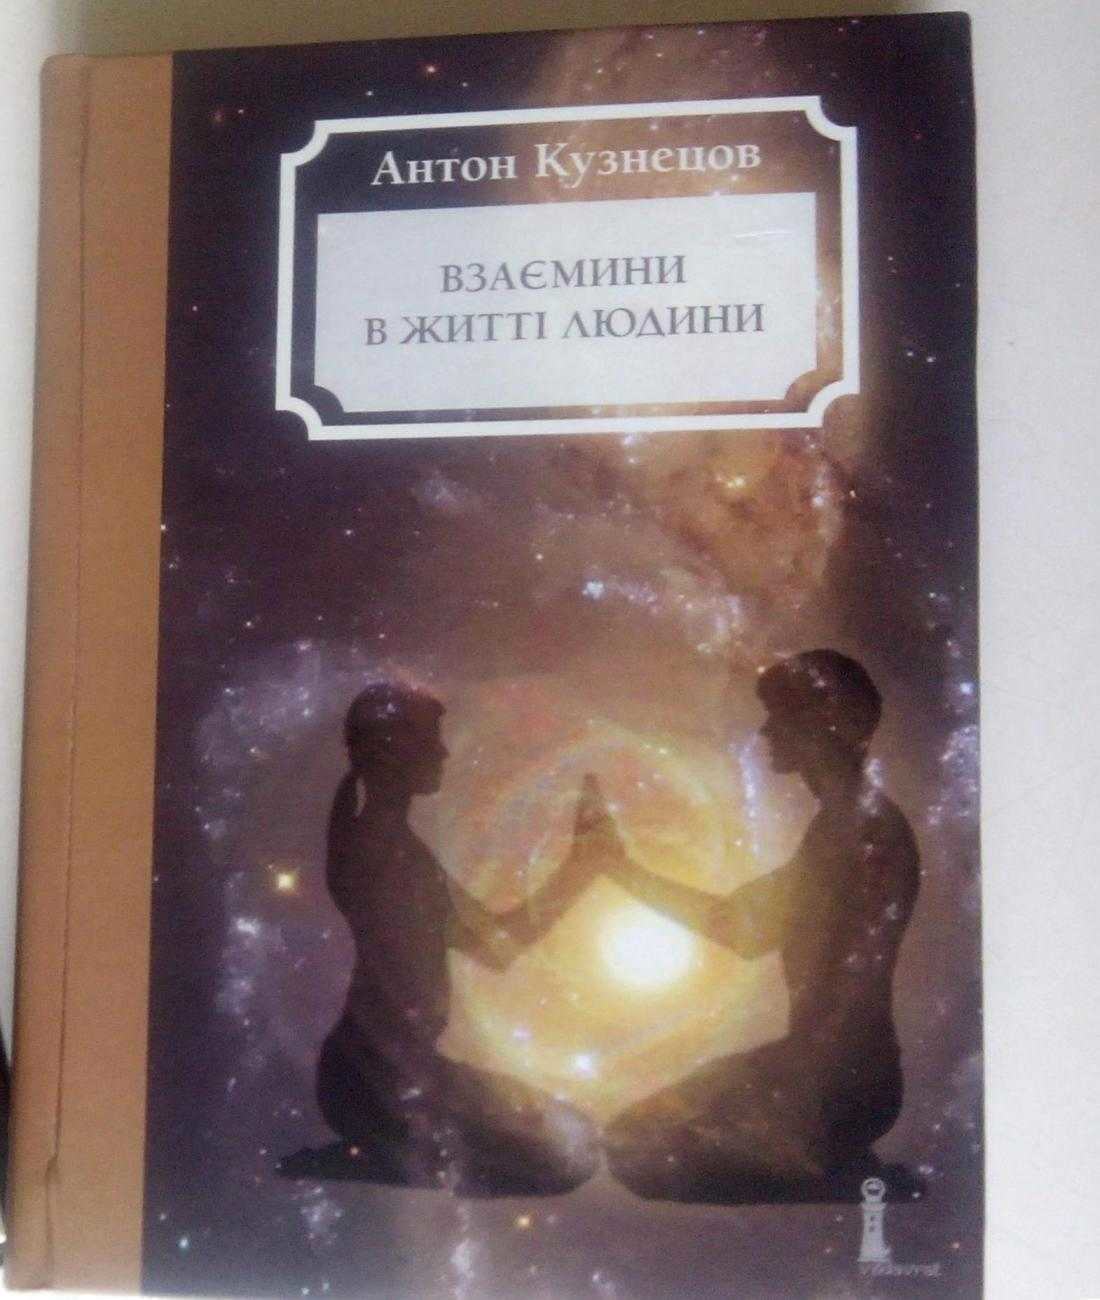 *** vedavrat-book Антон-Кузнецов книга Взаємини v1 ***